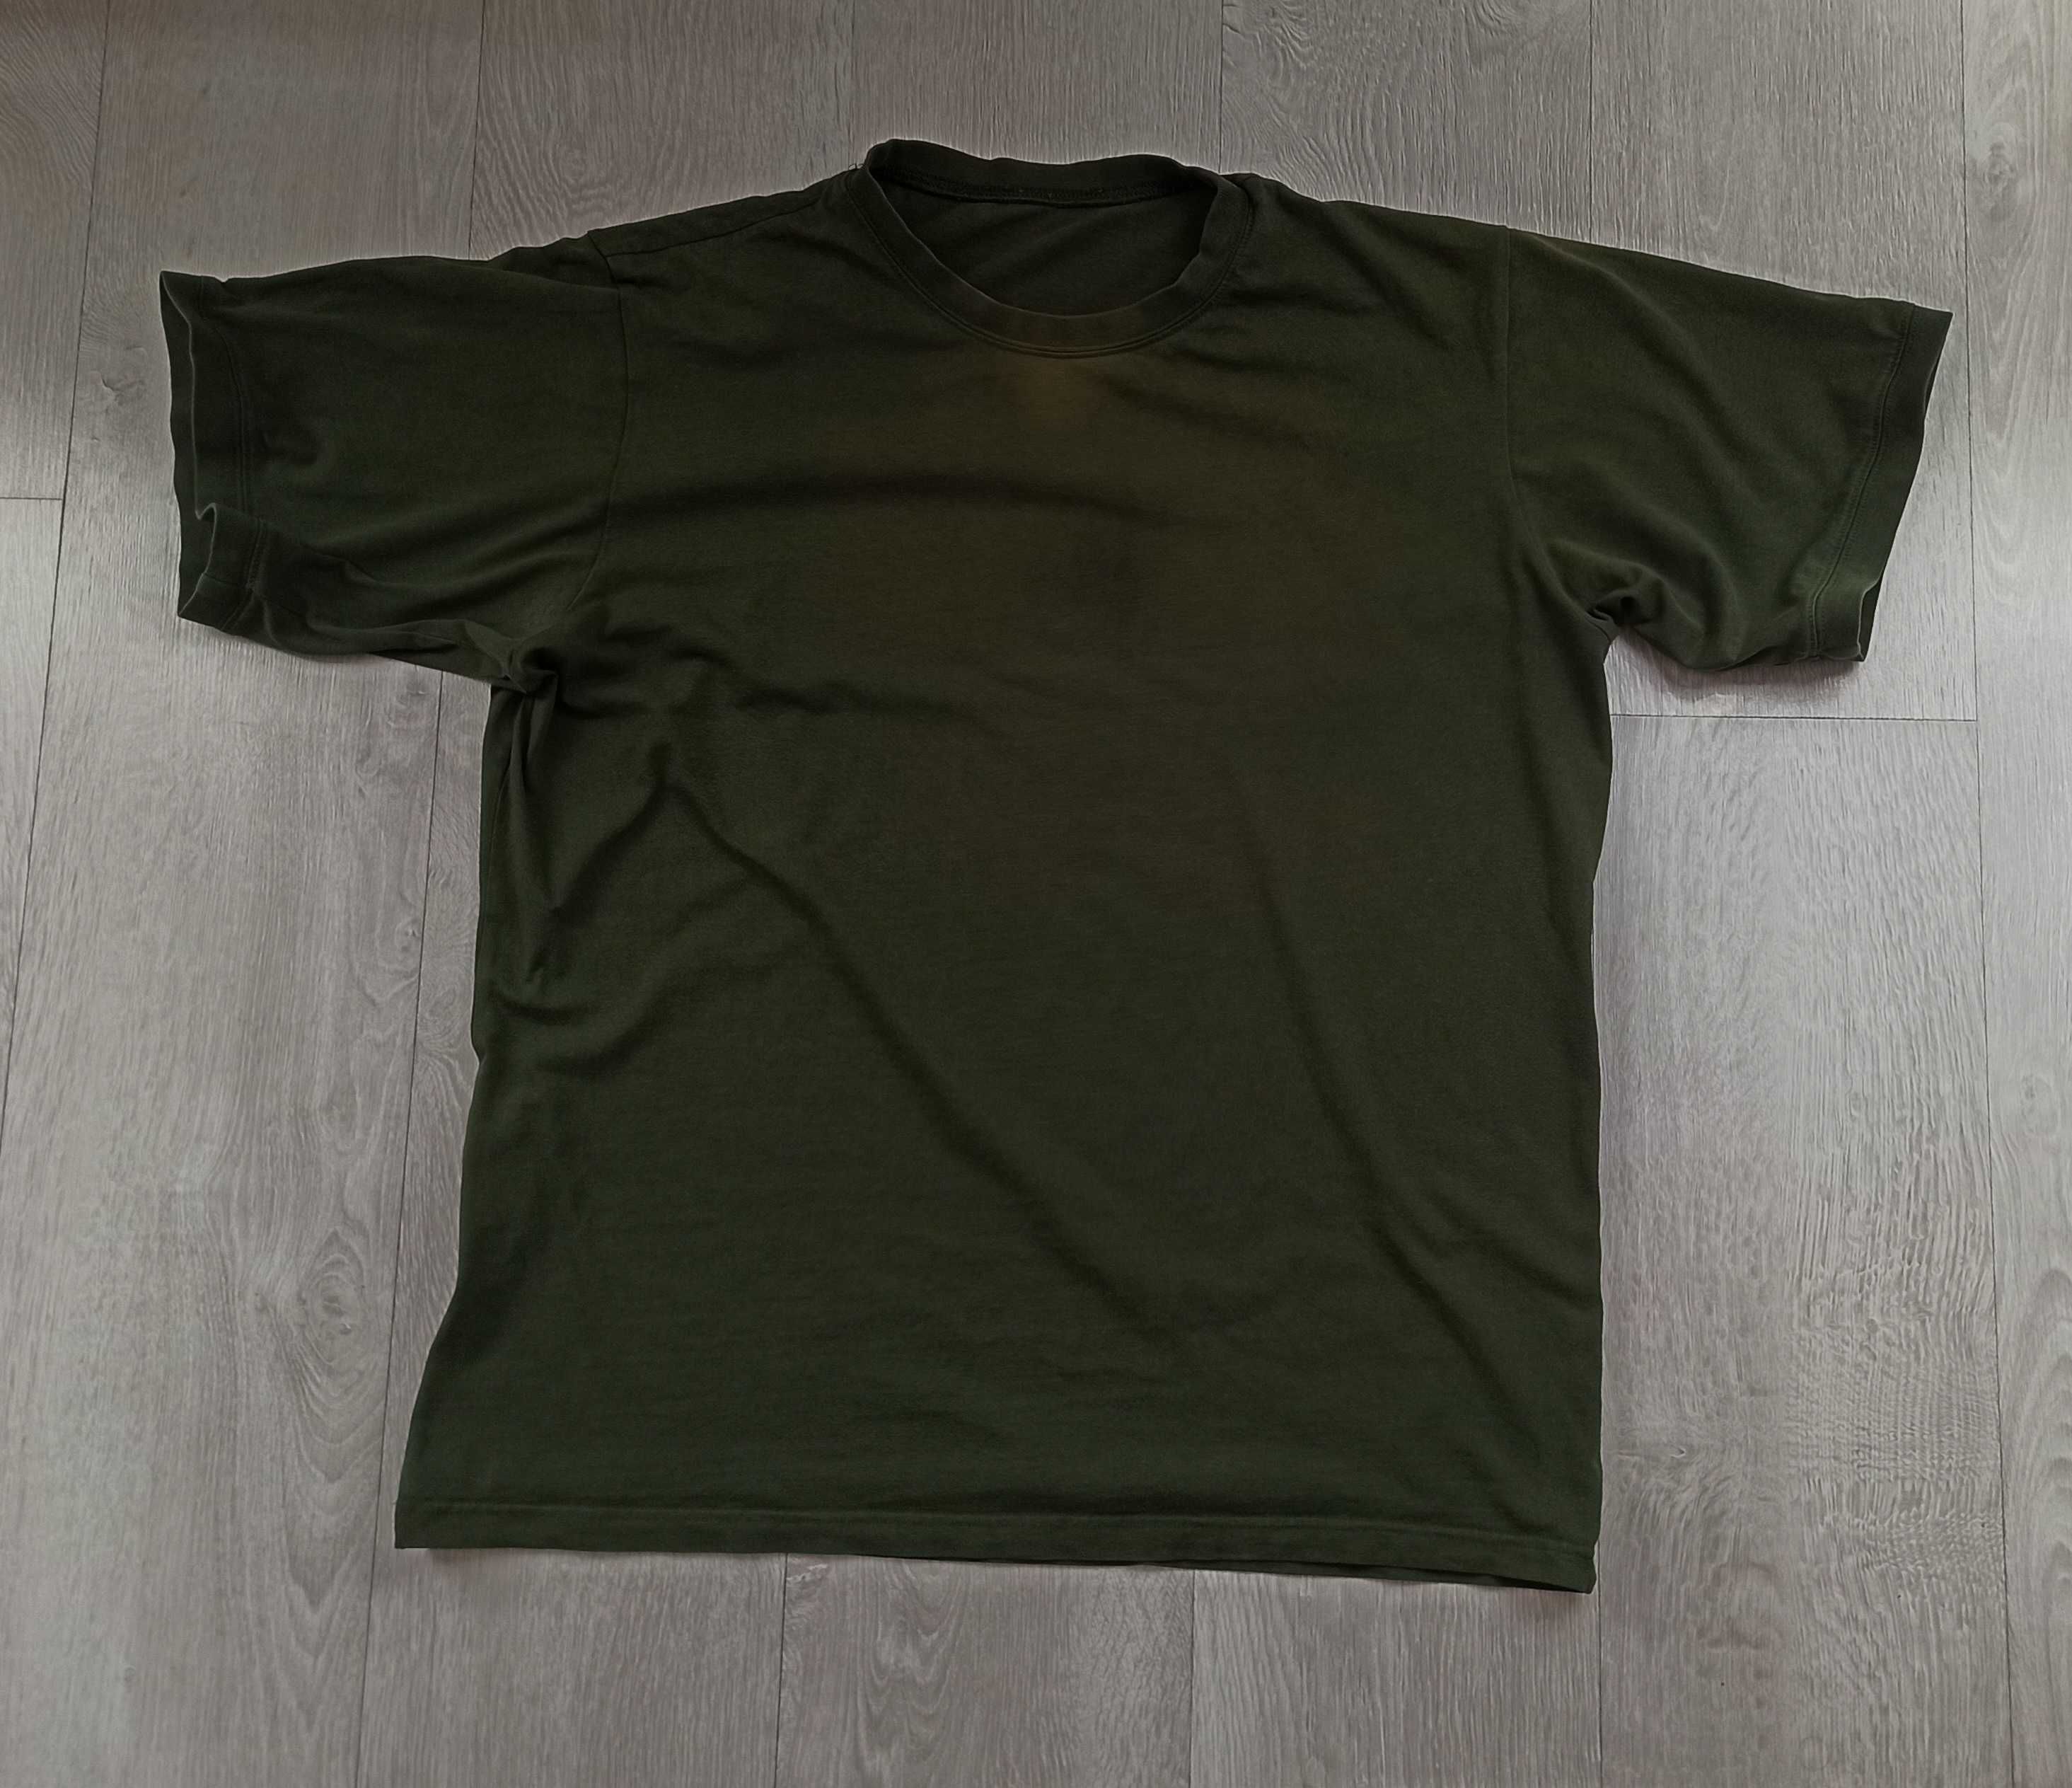 Koszulka wojskowa, wzór MON, kolor khaki,  rozmiar XL,